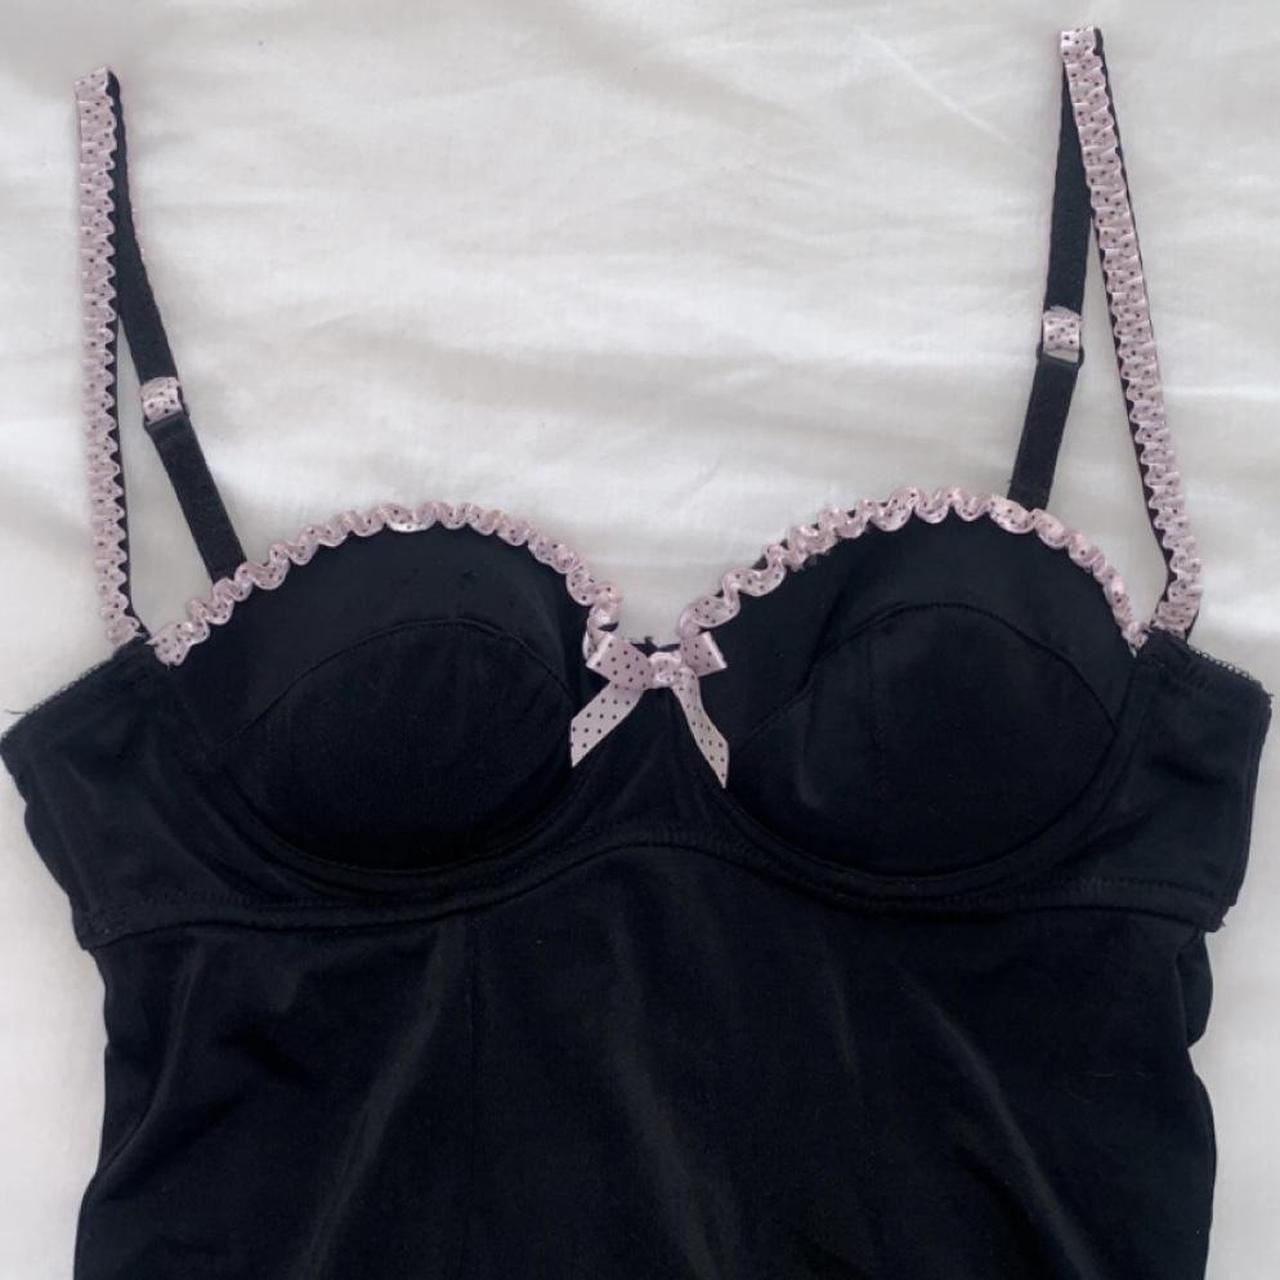 Ann Summers Women's Black and Pink Nightwear | Depop